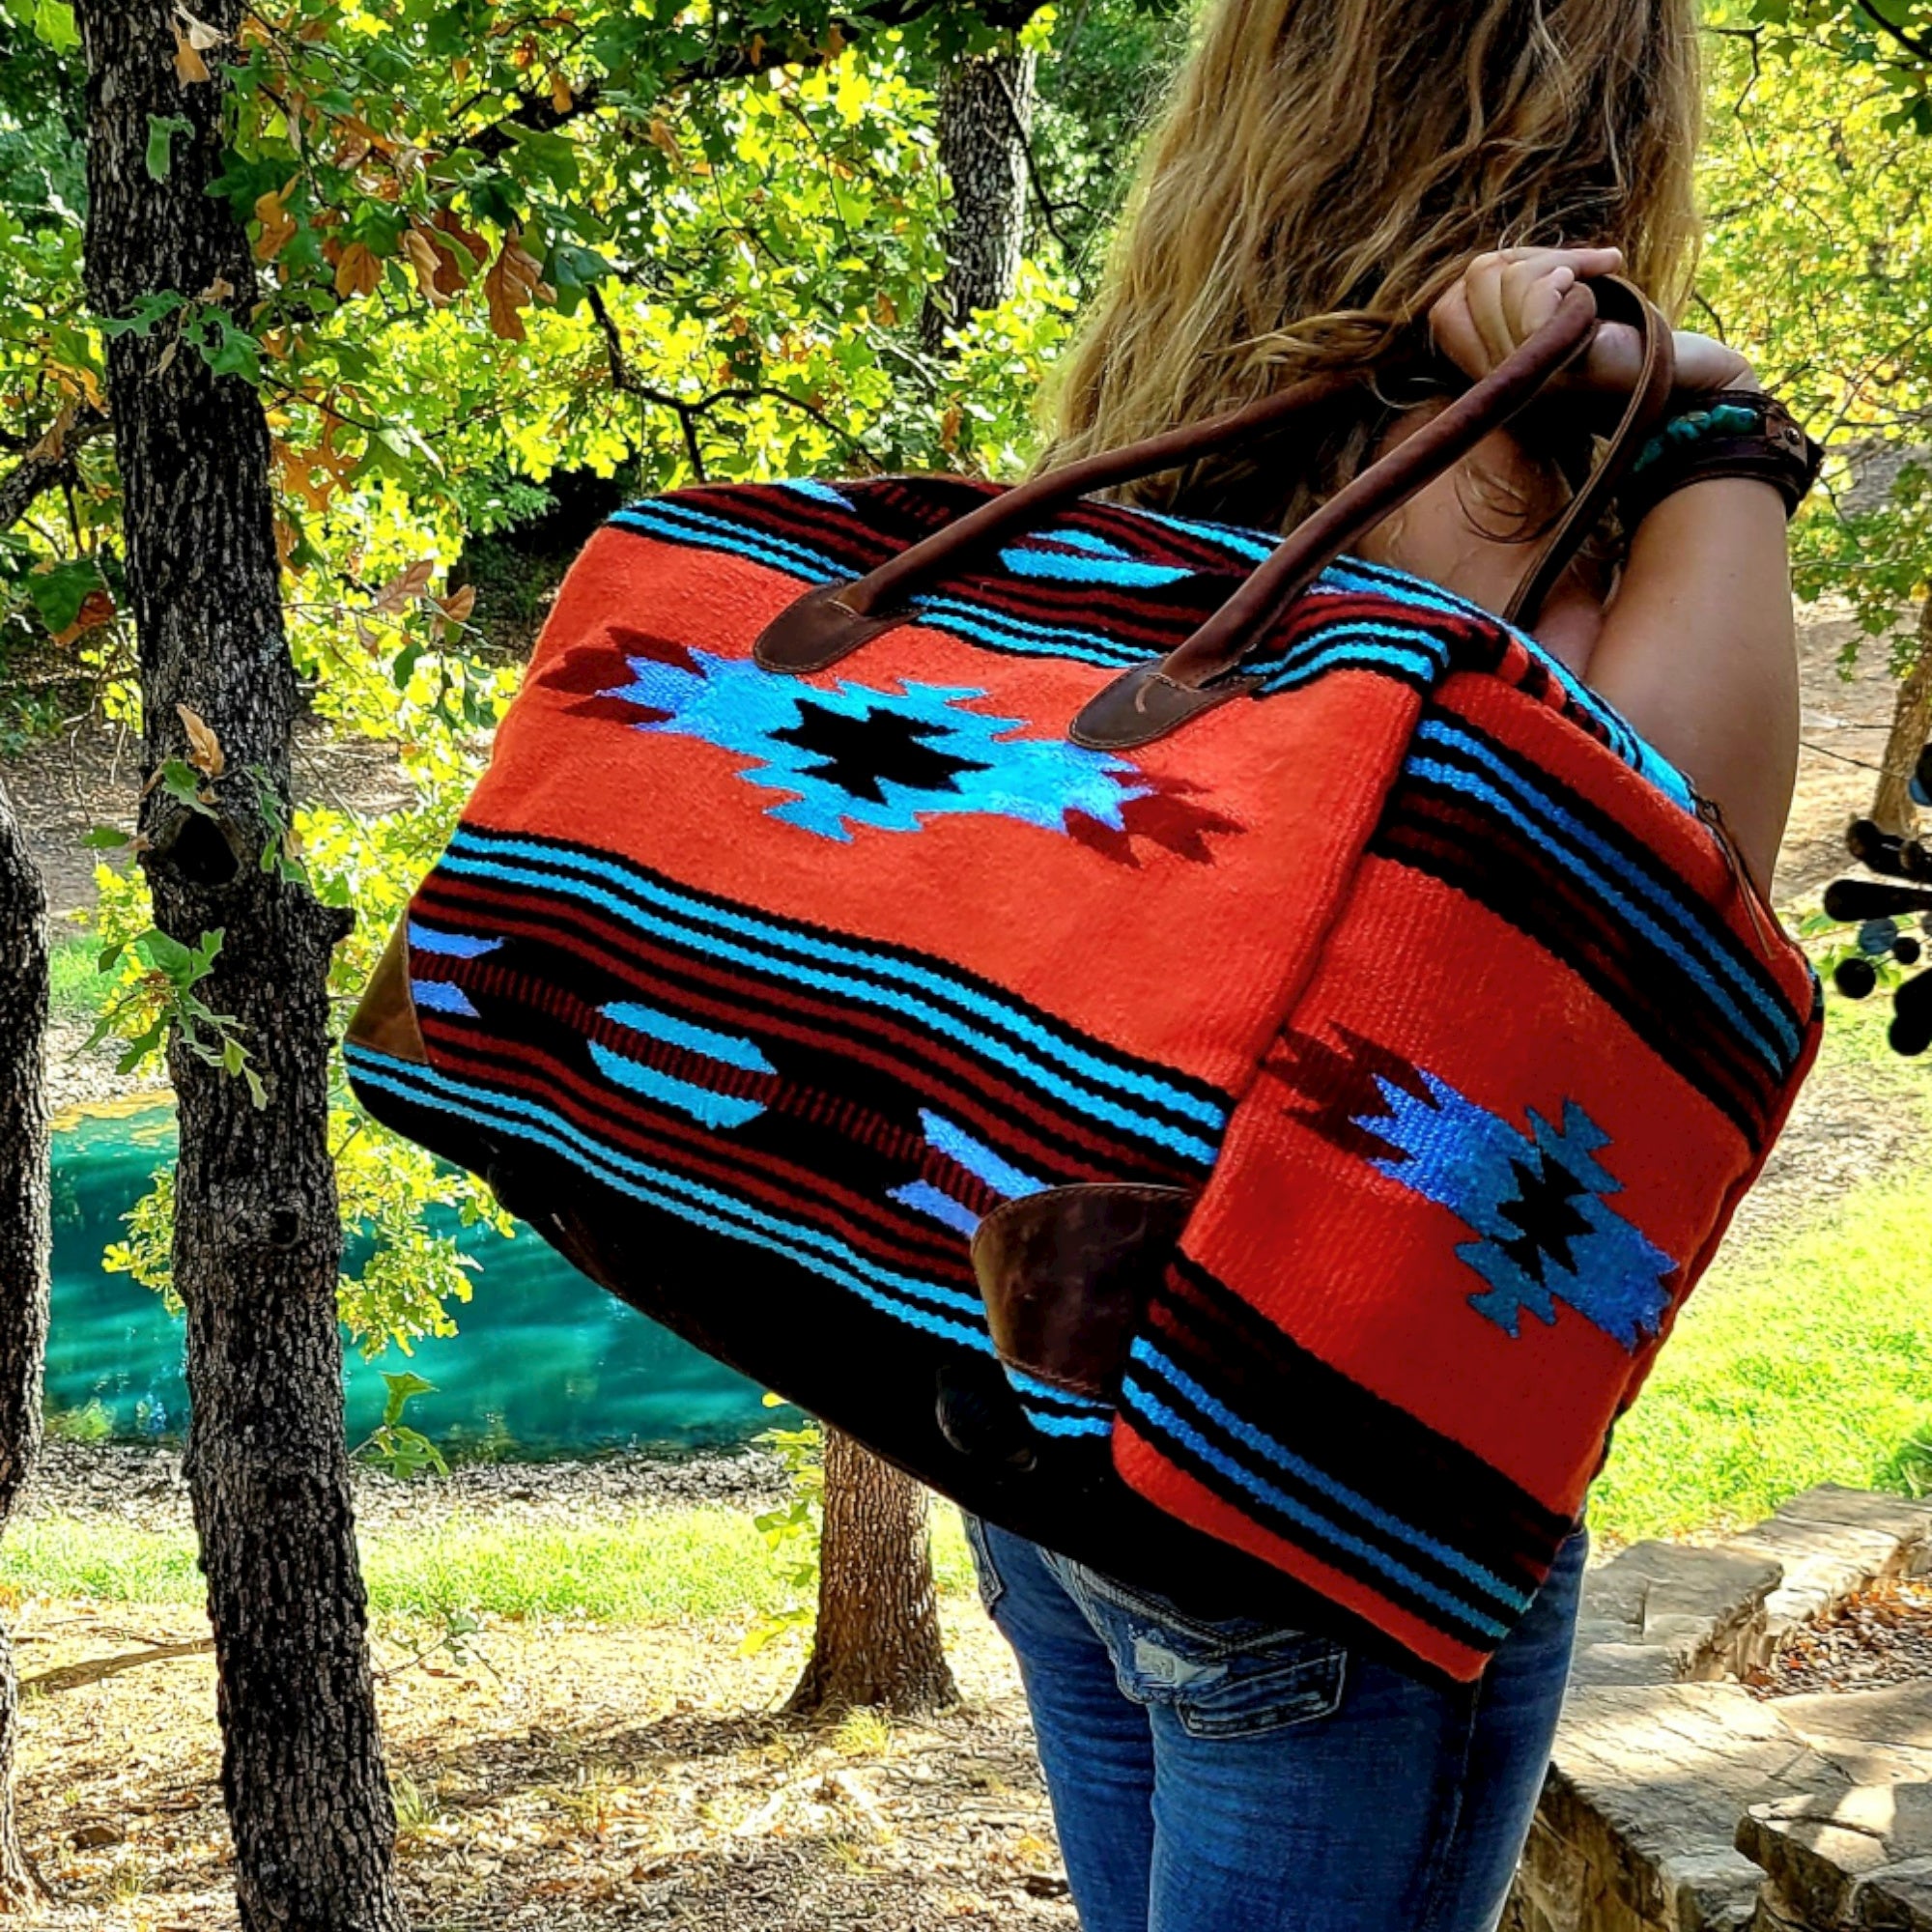 Boho Aztec Large Weekender Southwestern Duffel Bag Sedona Saddle Blanket Bag 100% Leather Handles